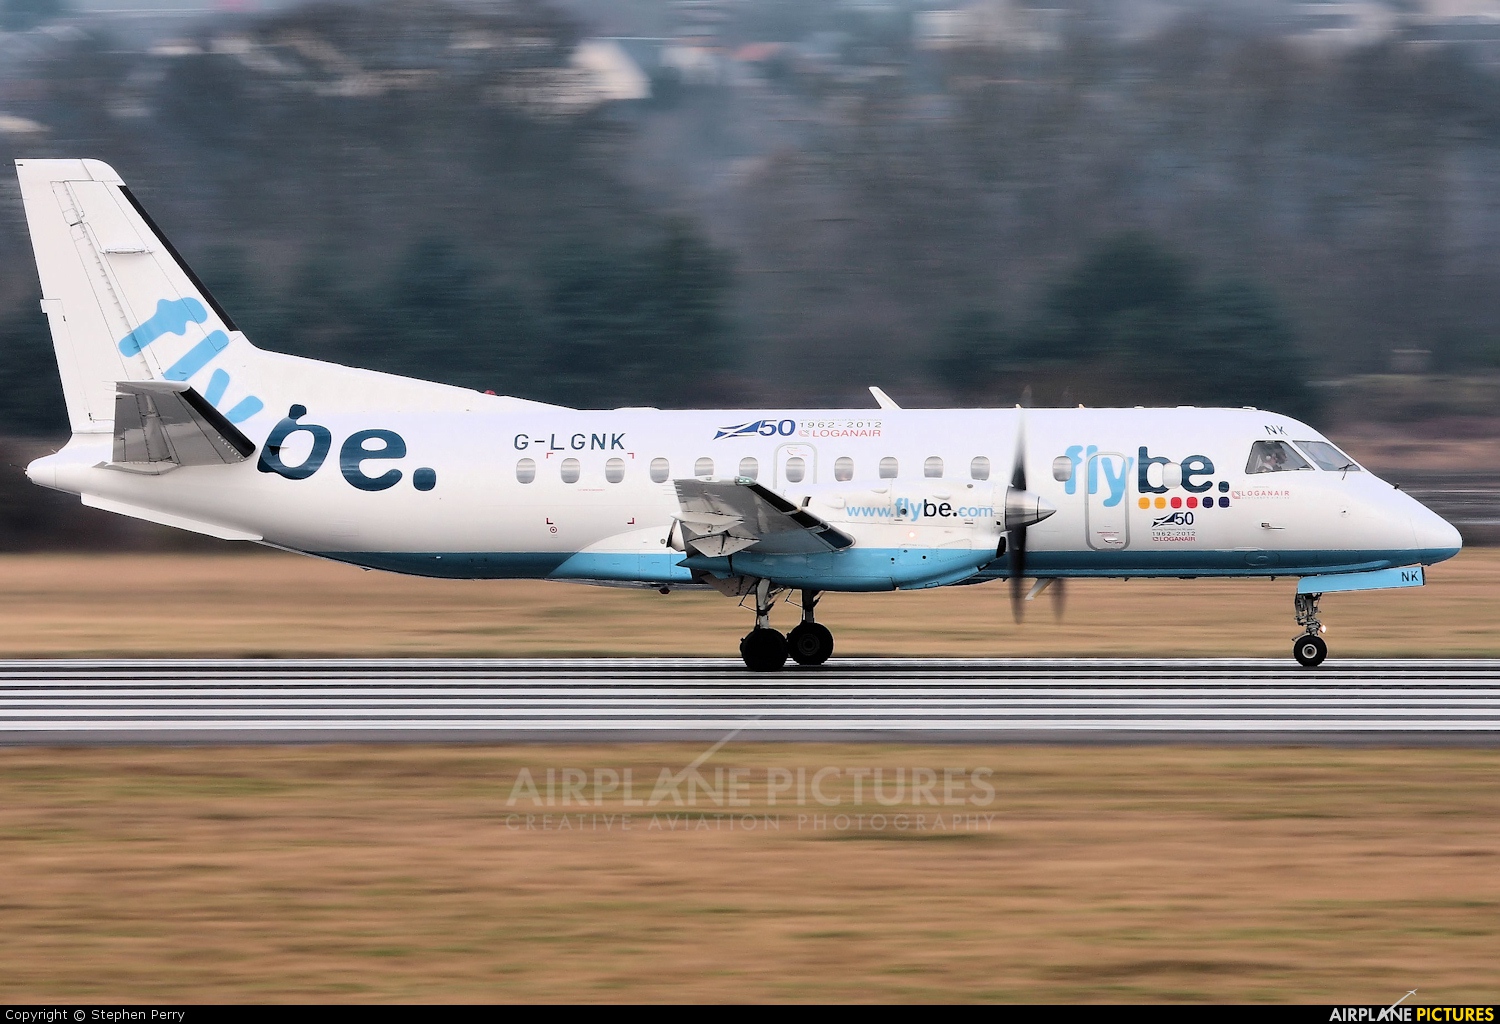 FlyBe - Loganair G-LGNK aircraft at Edinburgh